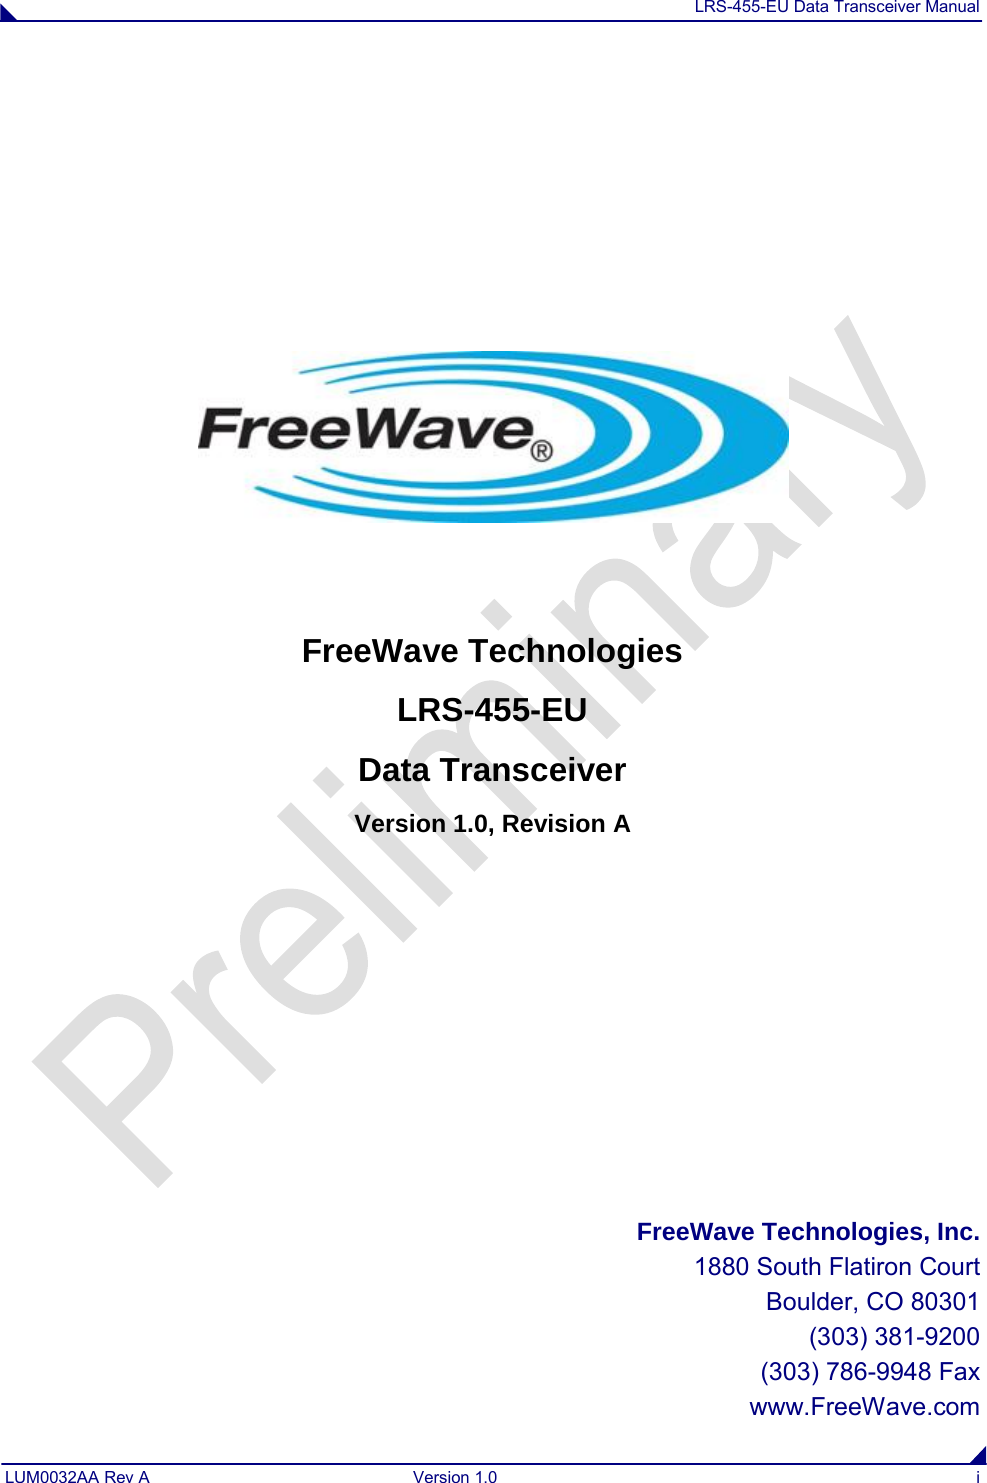 LRS-455-EU Data Transceiver Manual  LUM0032AA Rev A  Version 1.0  i           FreeWave Technologies LRS-455-EU Data Transceiver Version 1.0, Revision A         FreeWave Technologies, Inc. 1880 South Flatiron Court Boulder, CO 80301 (303) 381-9200 (303) 786-9948 Fax www.FreeWave.com 